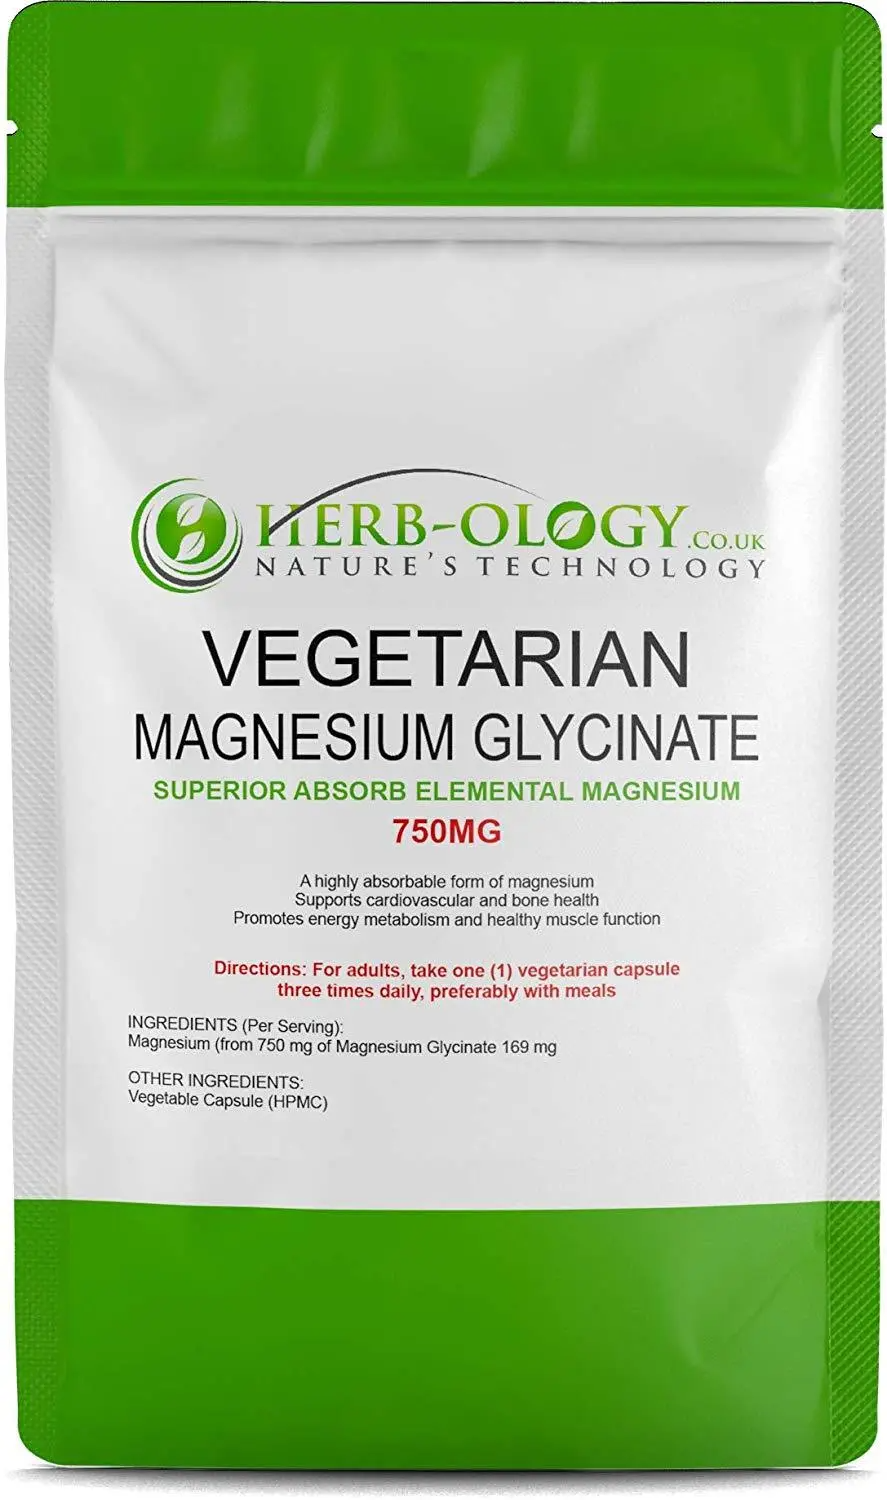 Magnesium Glycinate 750mg